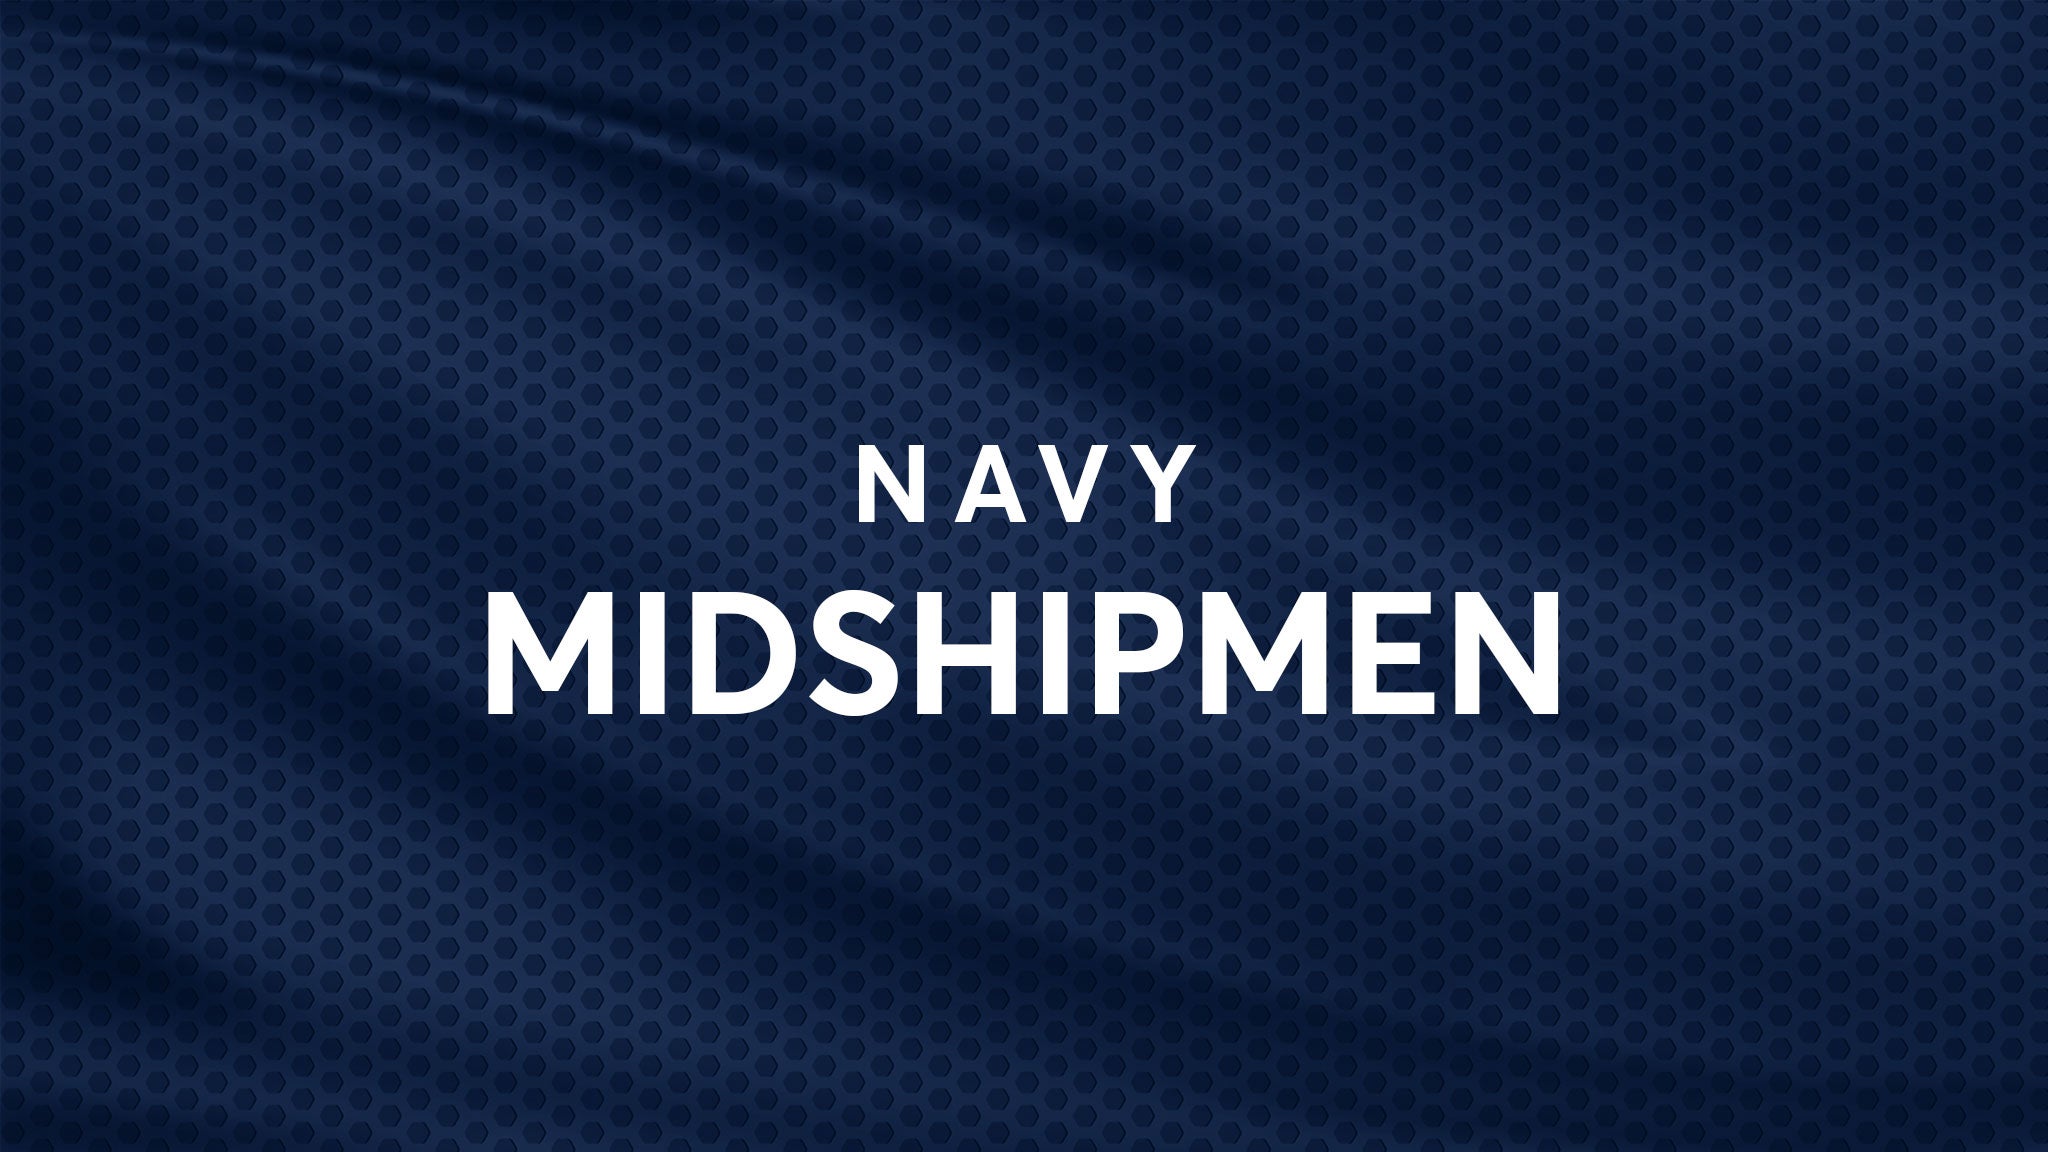 Navy Midshipmen Football vs. UNC Charlotte 49ers Football hero